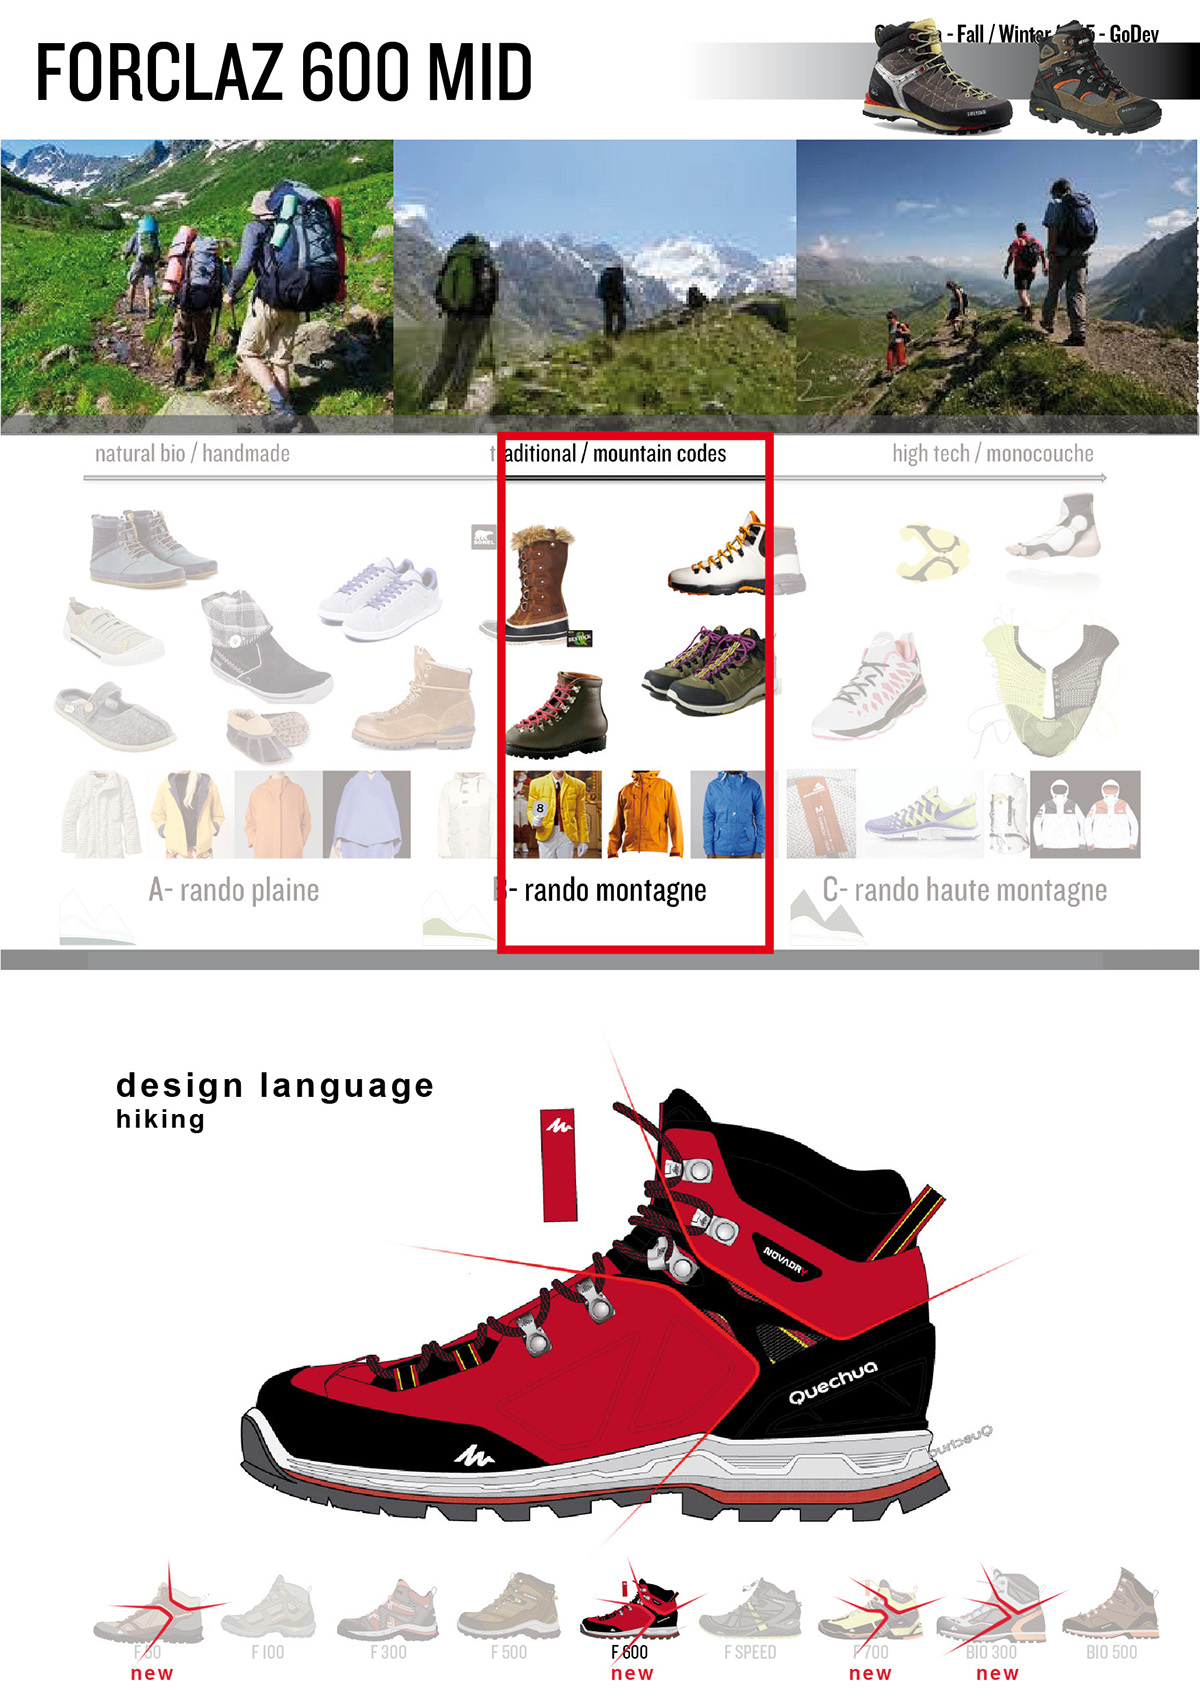 Quechua Forclaz 500 trekking shoe review   YogeshSarkarcom